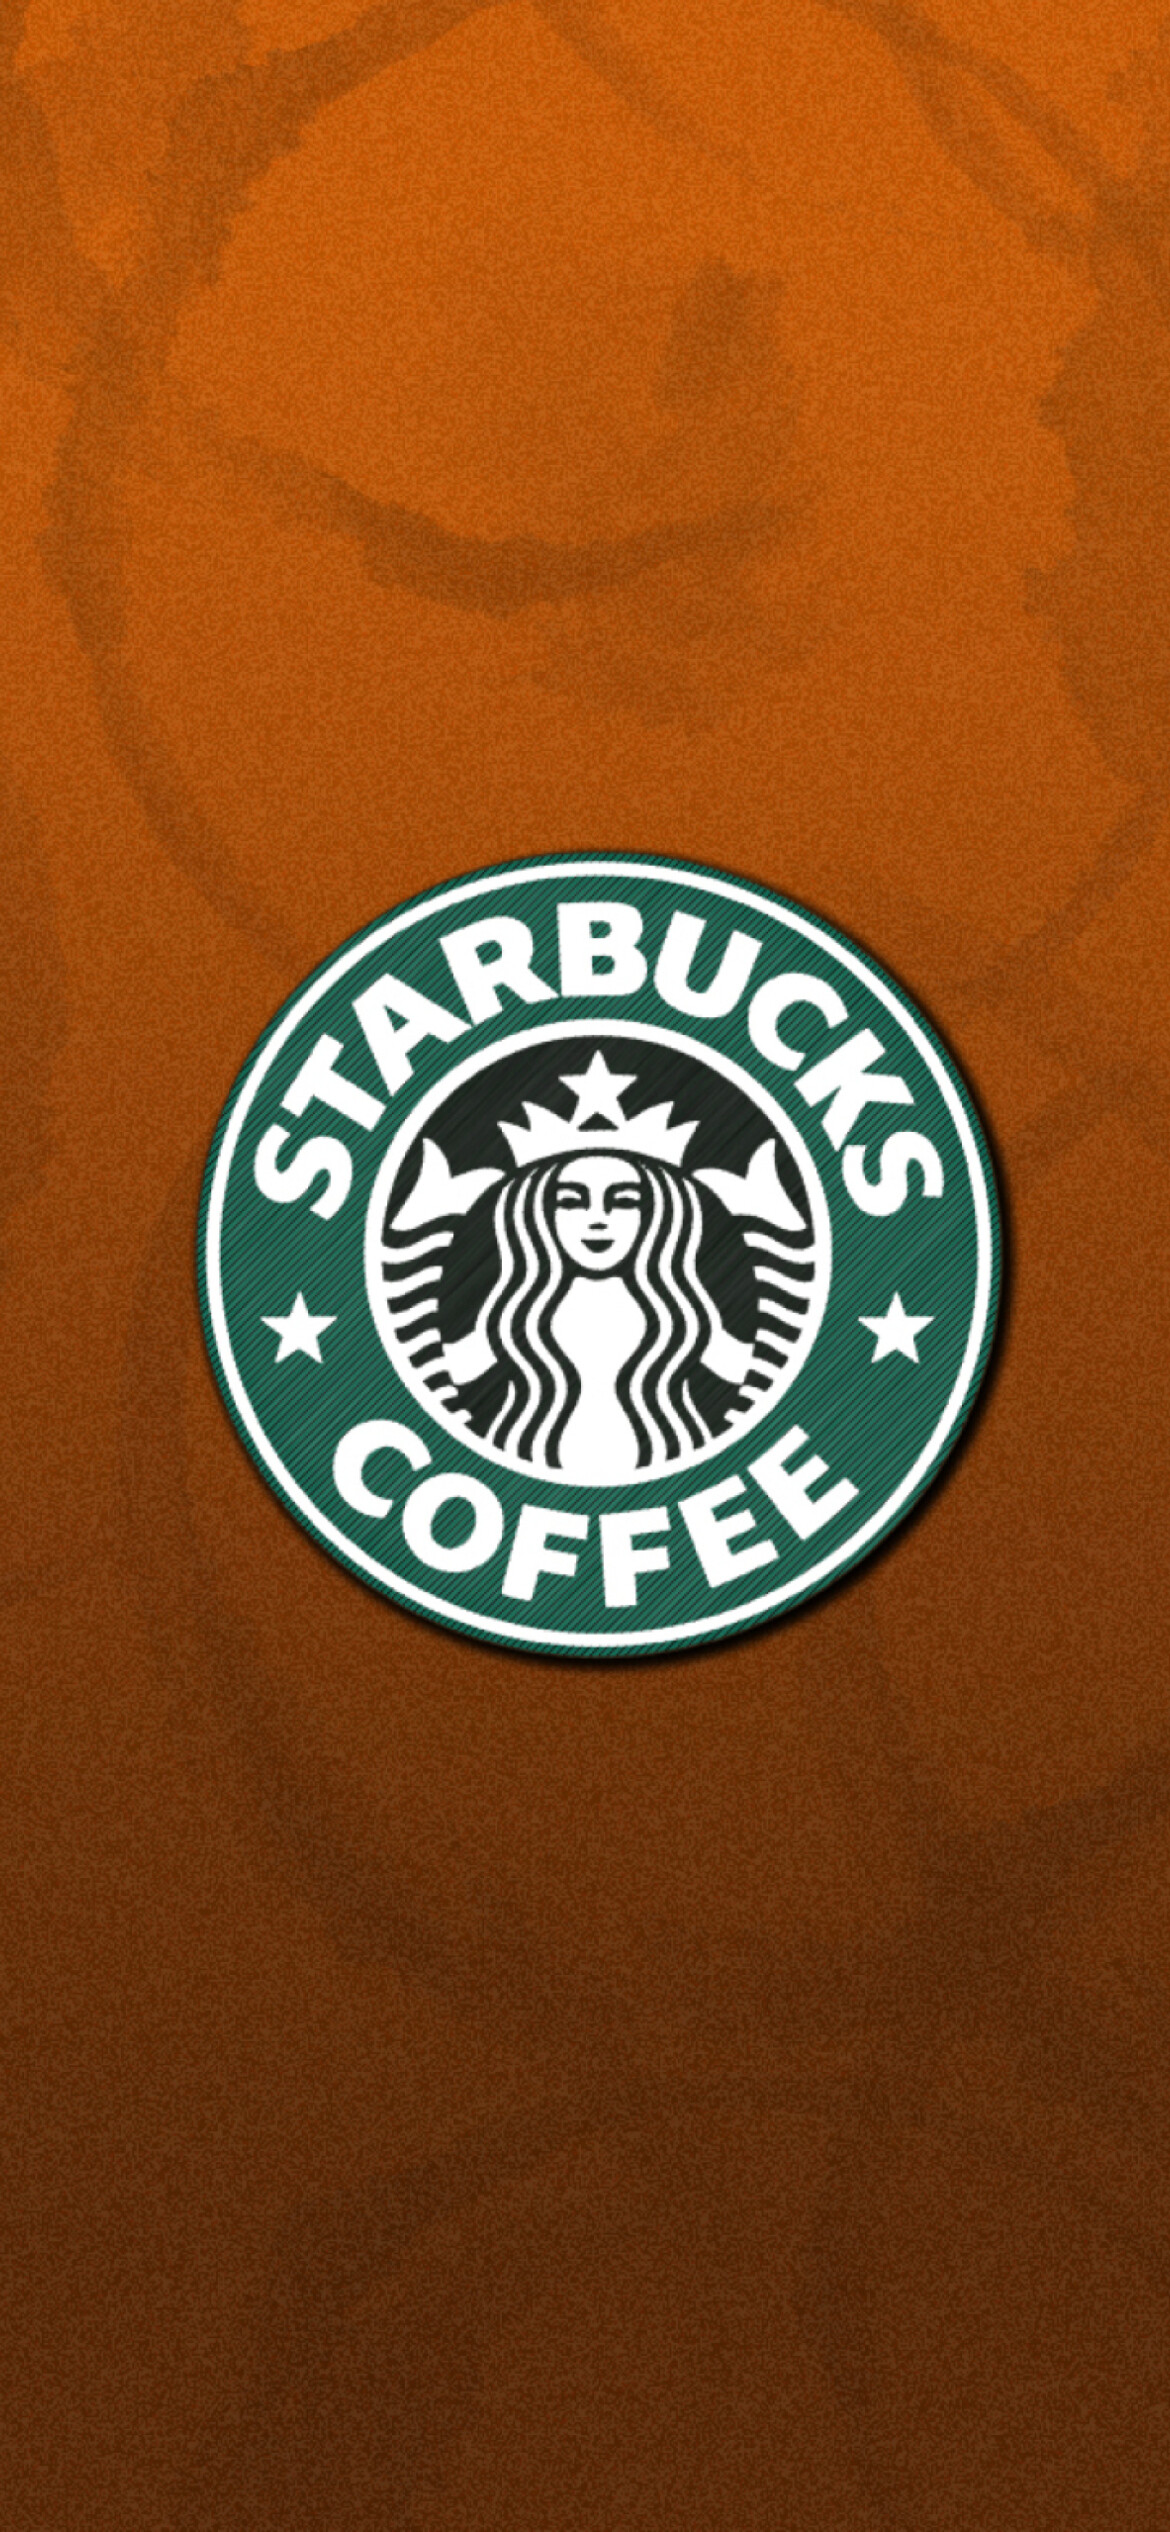 Starbucks: A specialty coffee retailer, Logo, Brand. 1170x2540 HD Wallpaper.